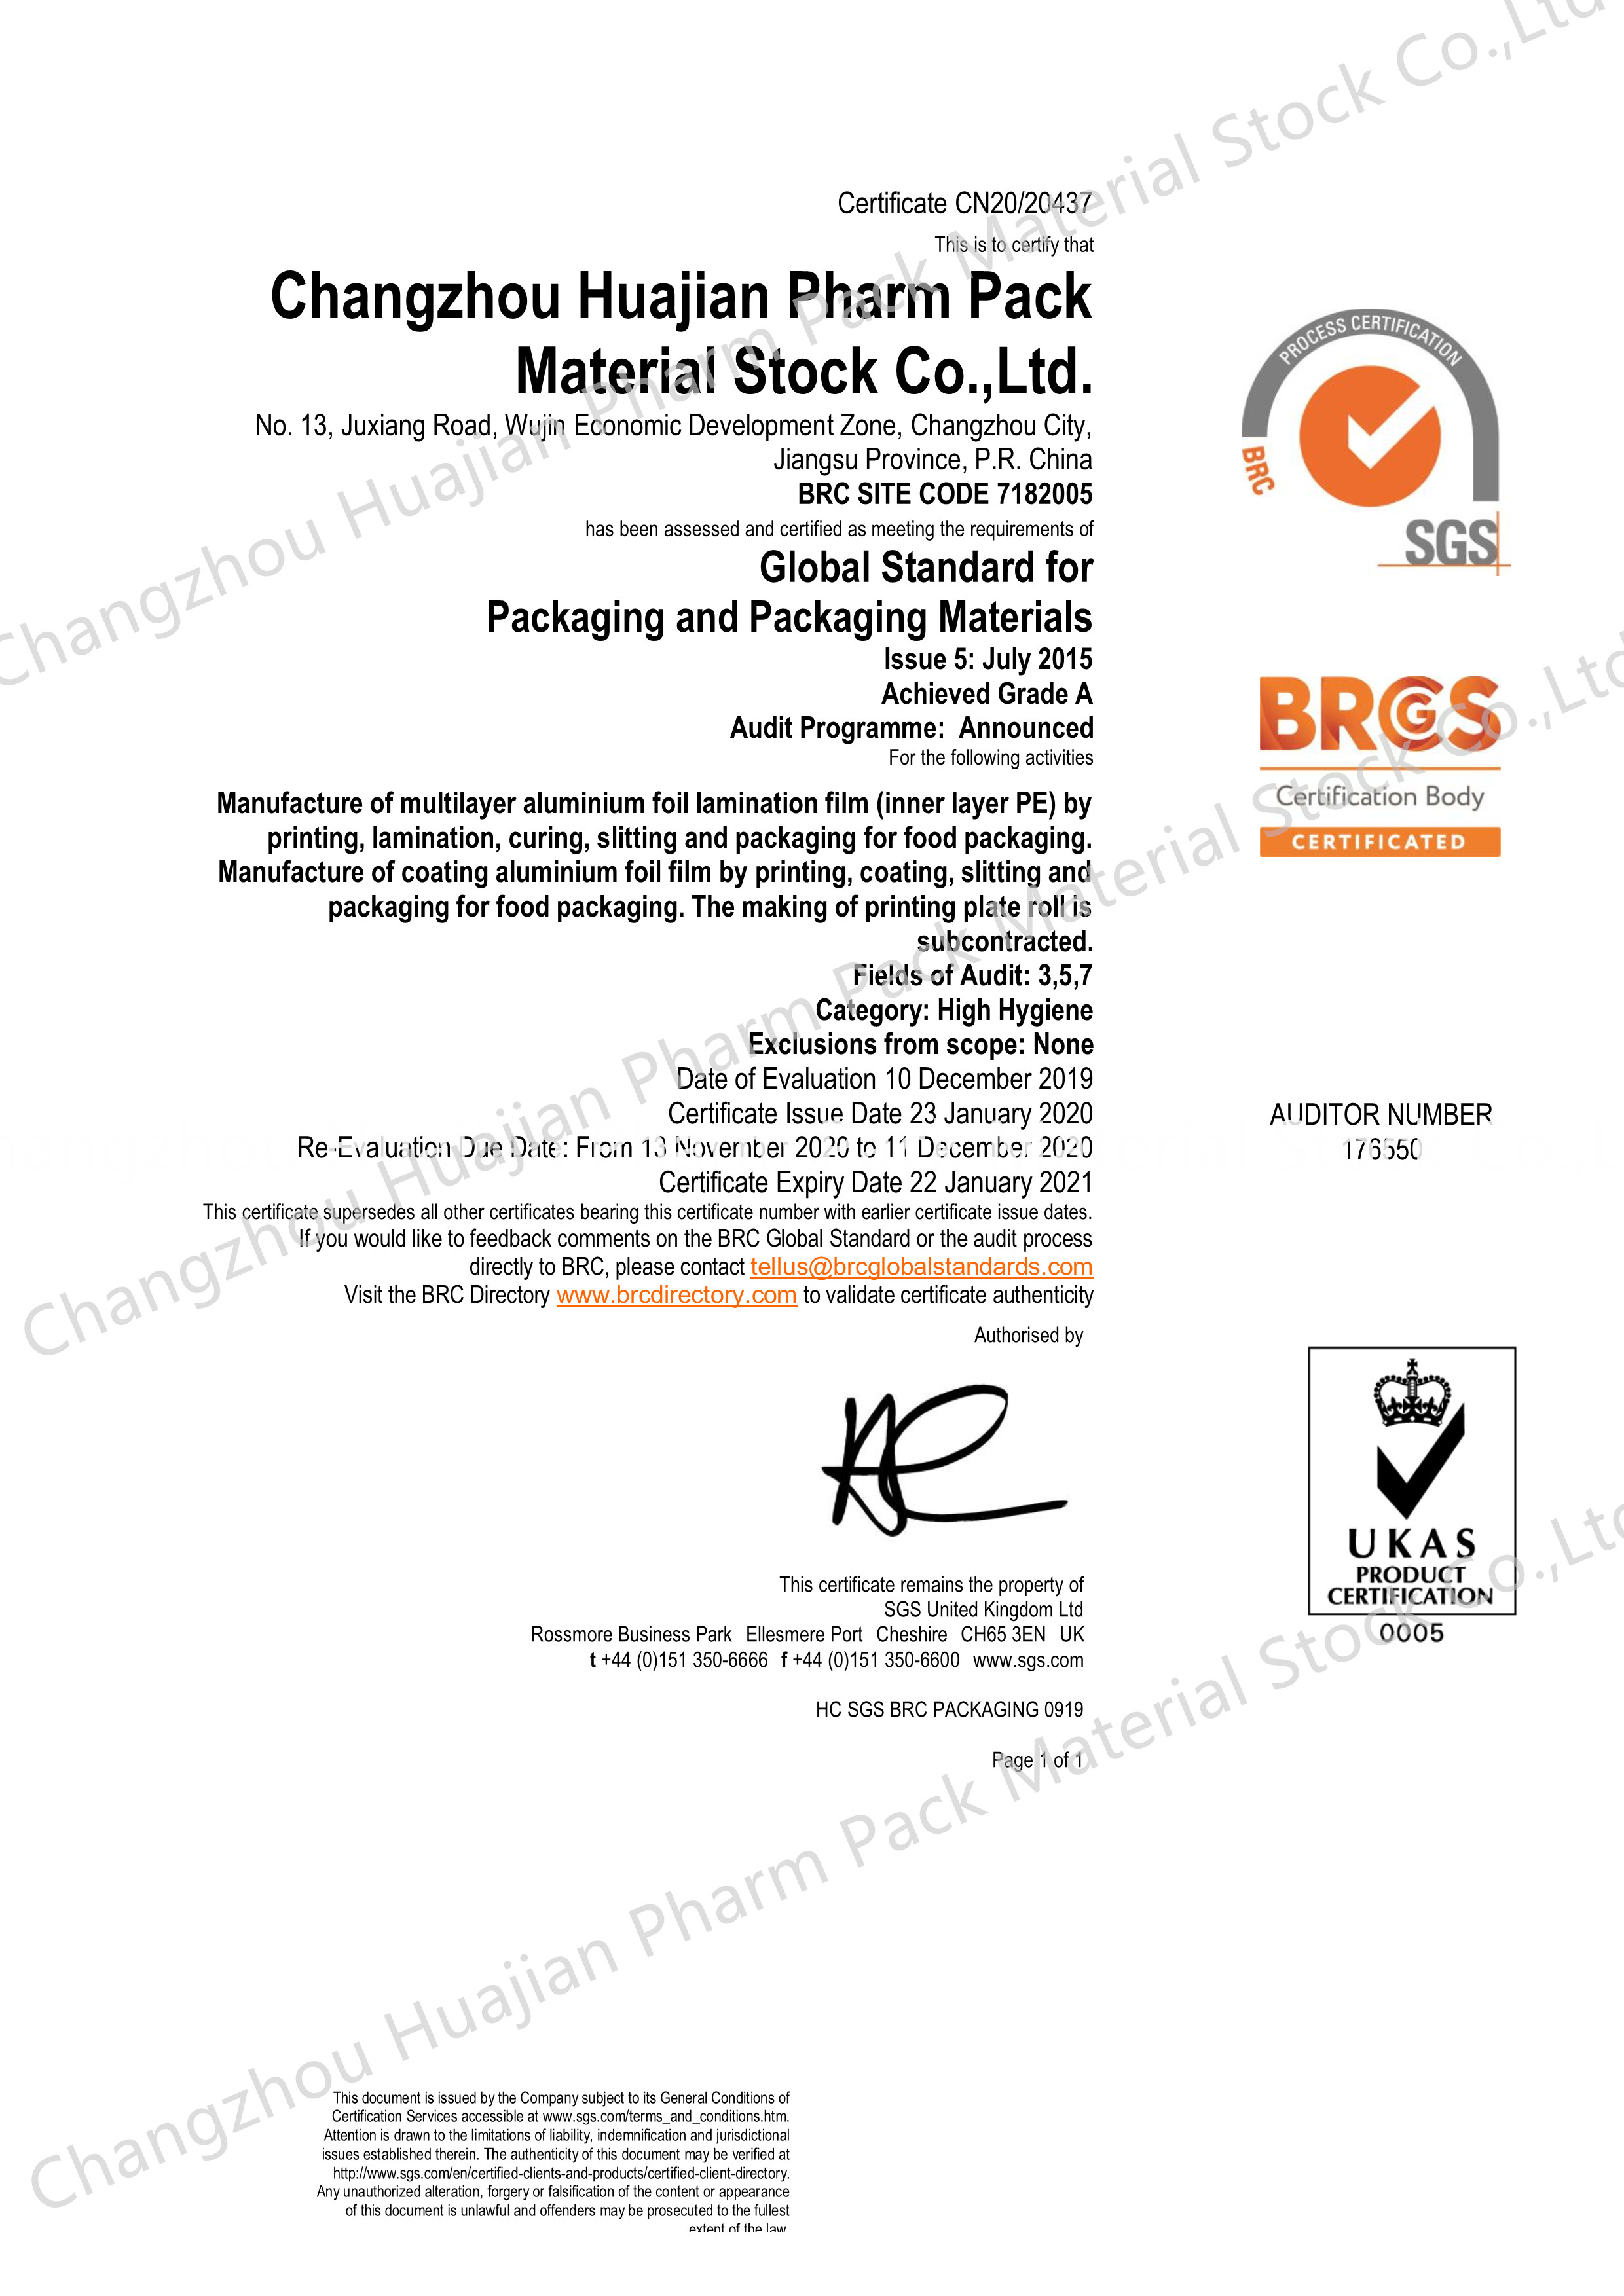 Changzhou Huajian Pharm Pack Material Stock Co.,Ltd Certifications